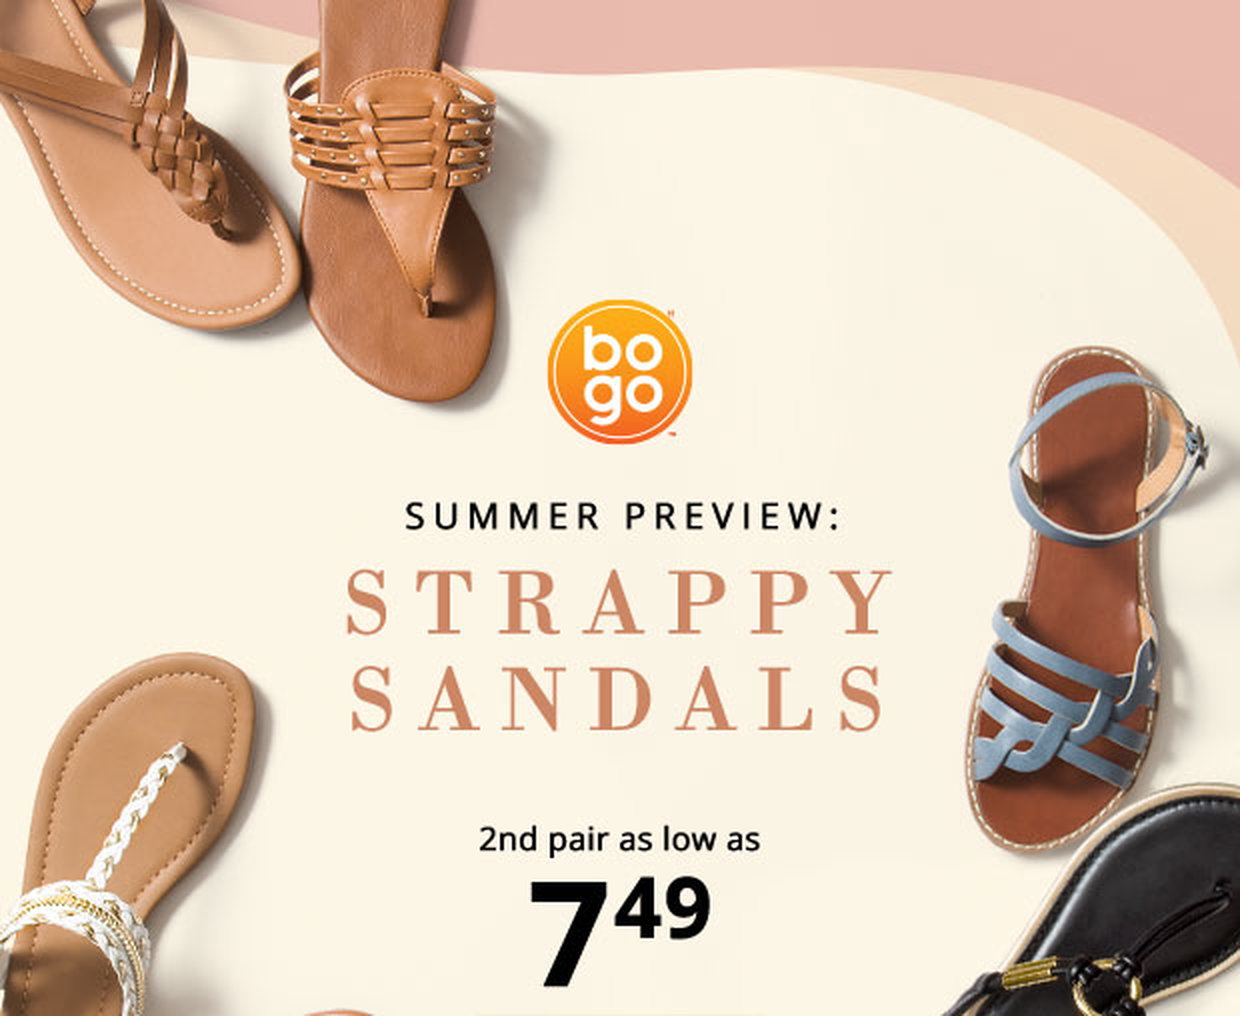 payless sandals online